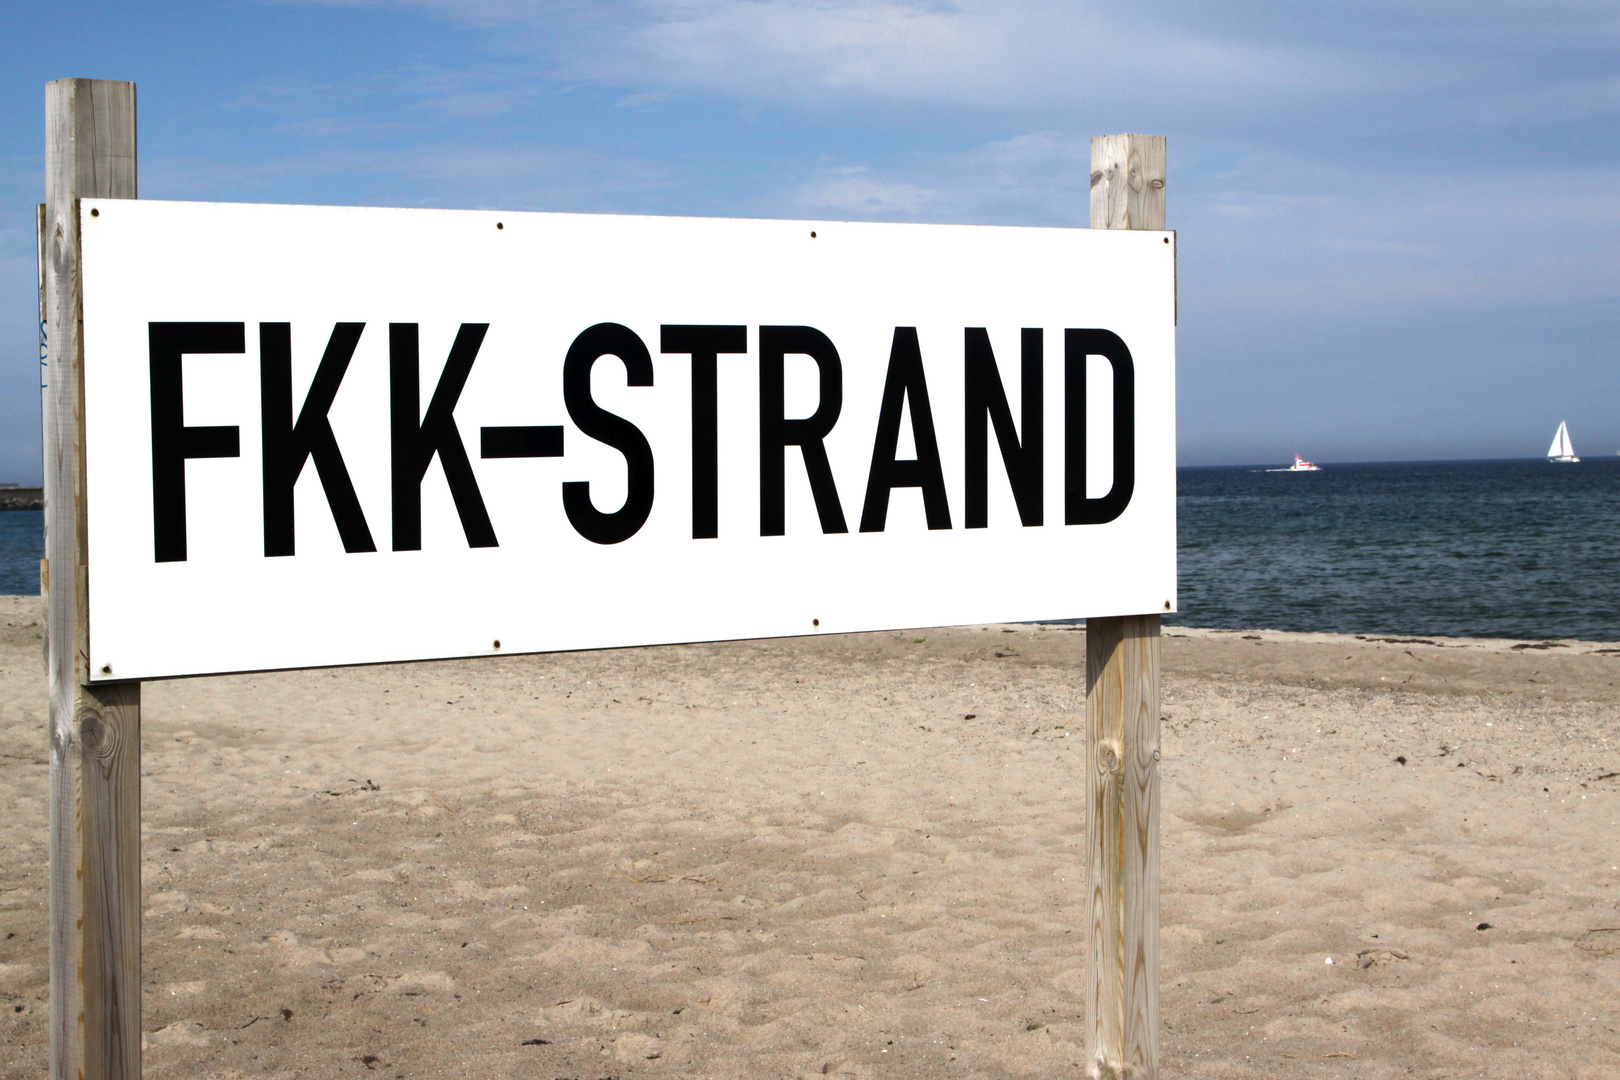 FKK Strand